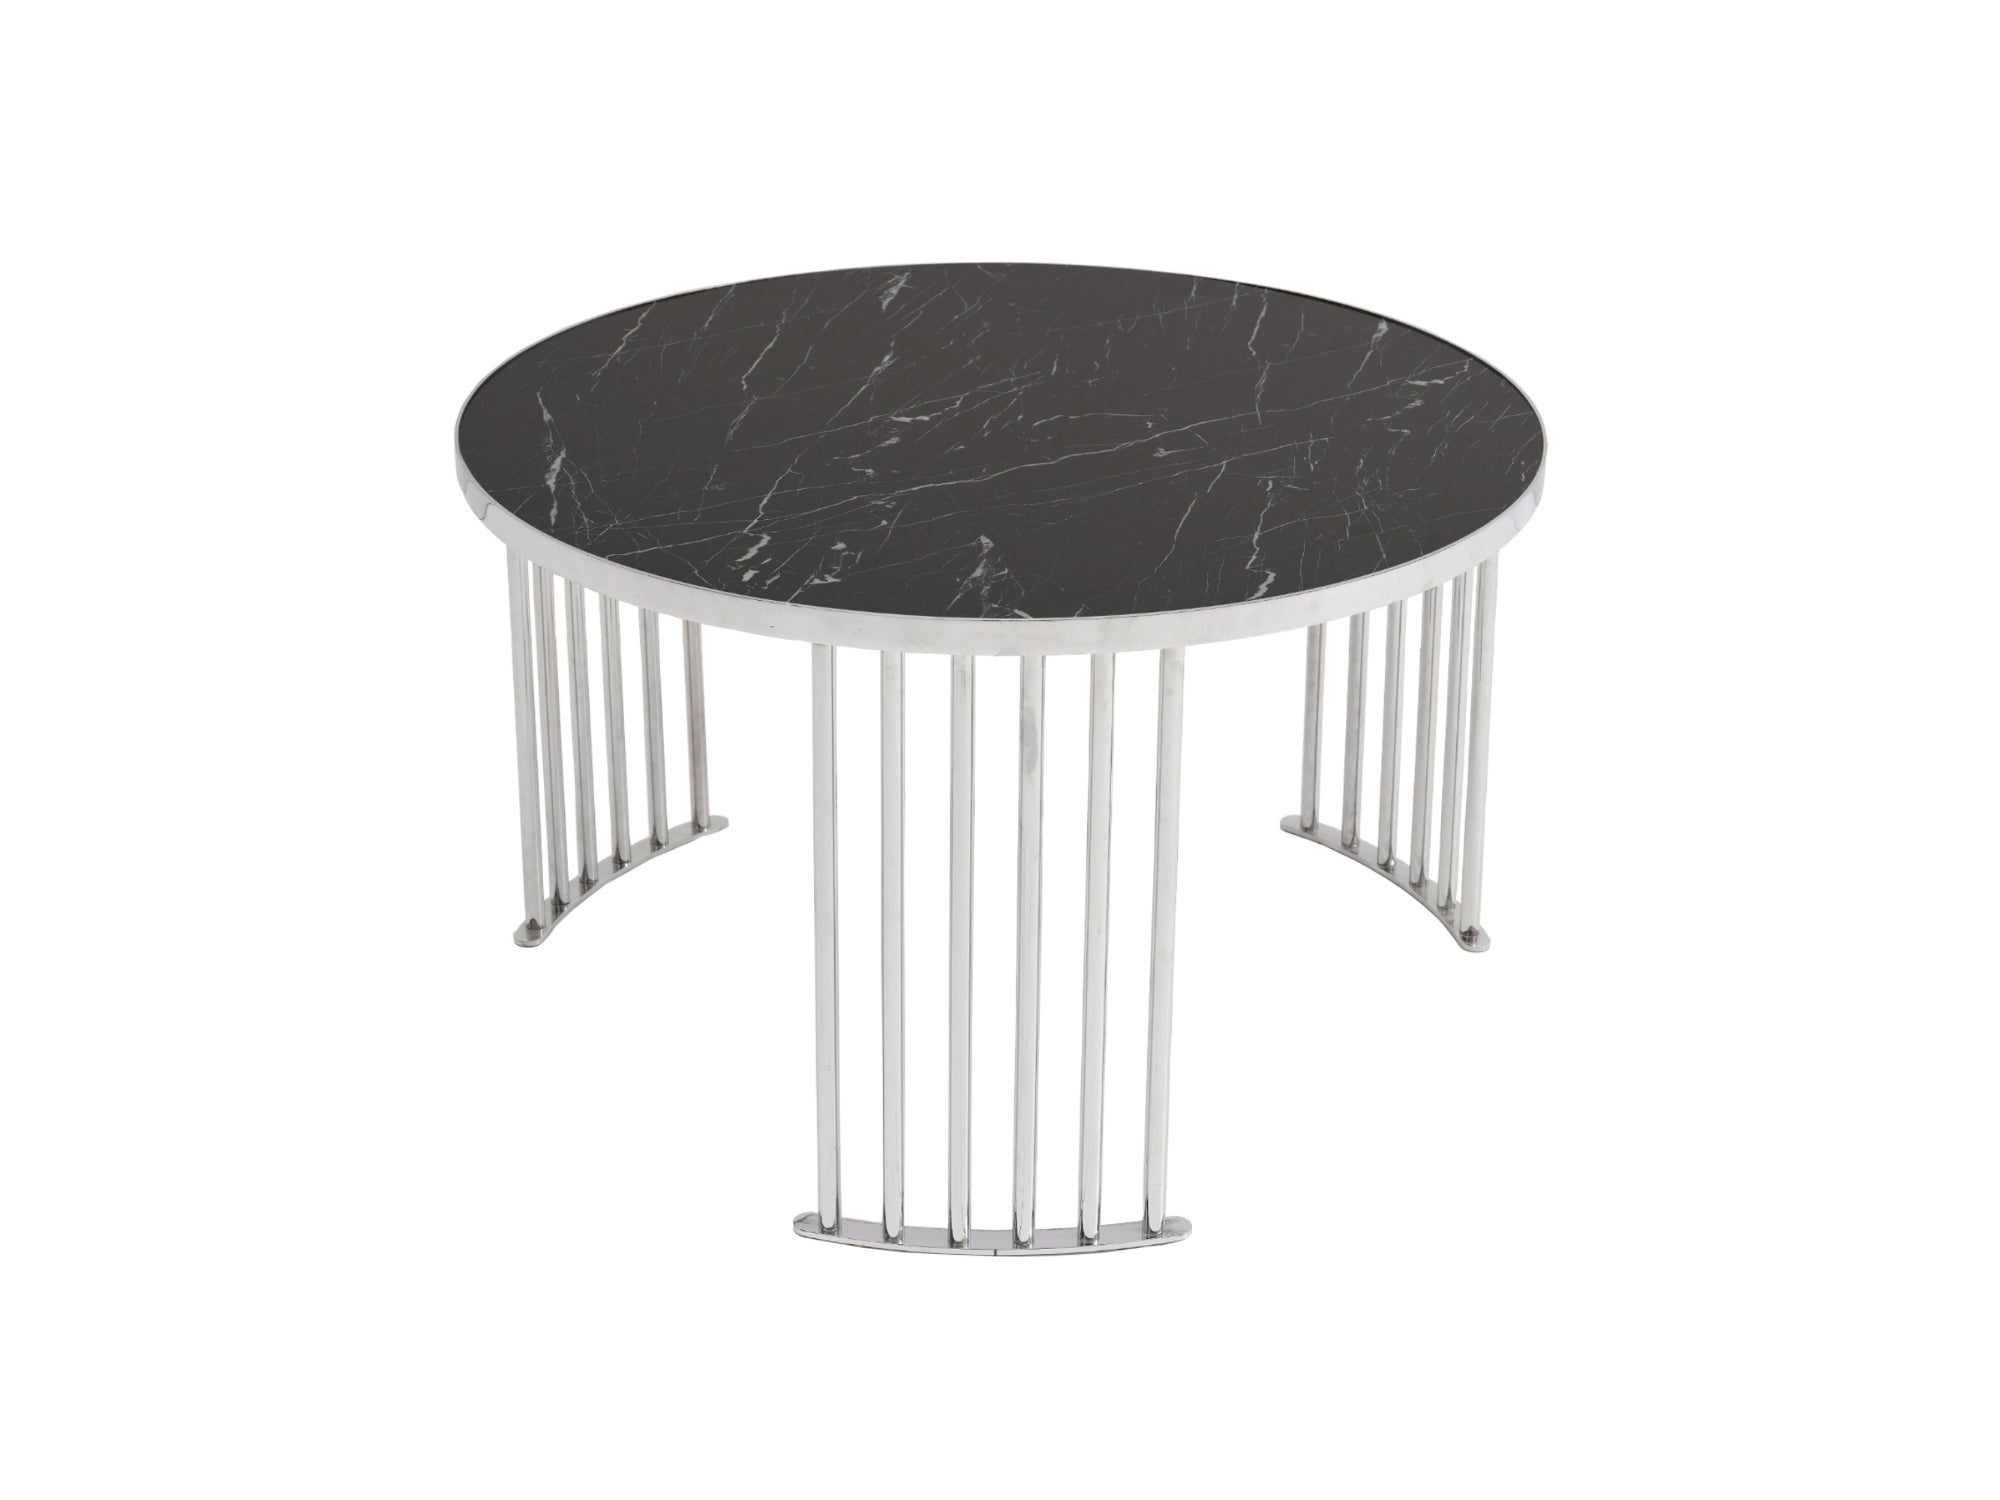 G301 Coffee Table Choreme Legs - Black Marble top